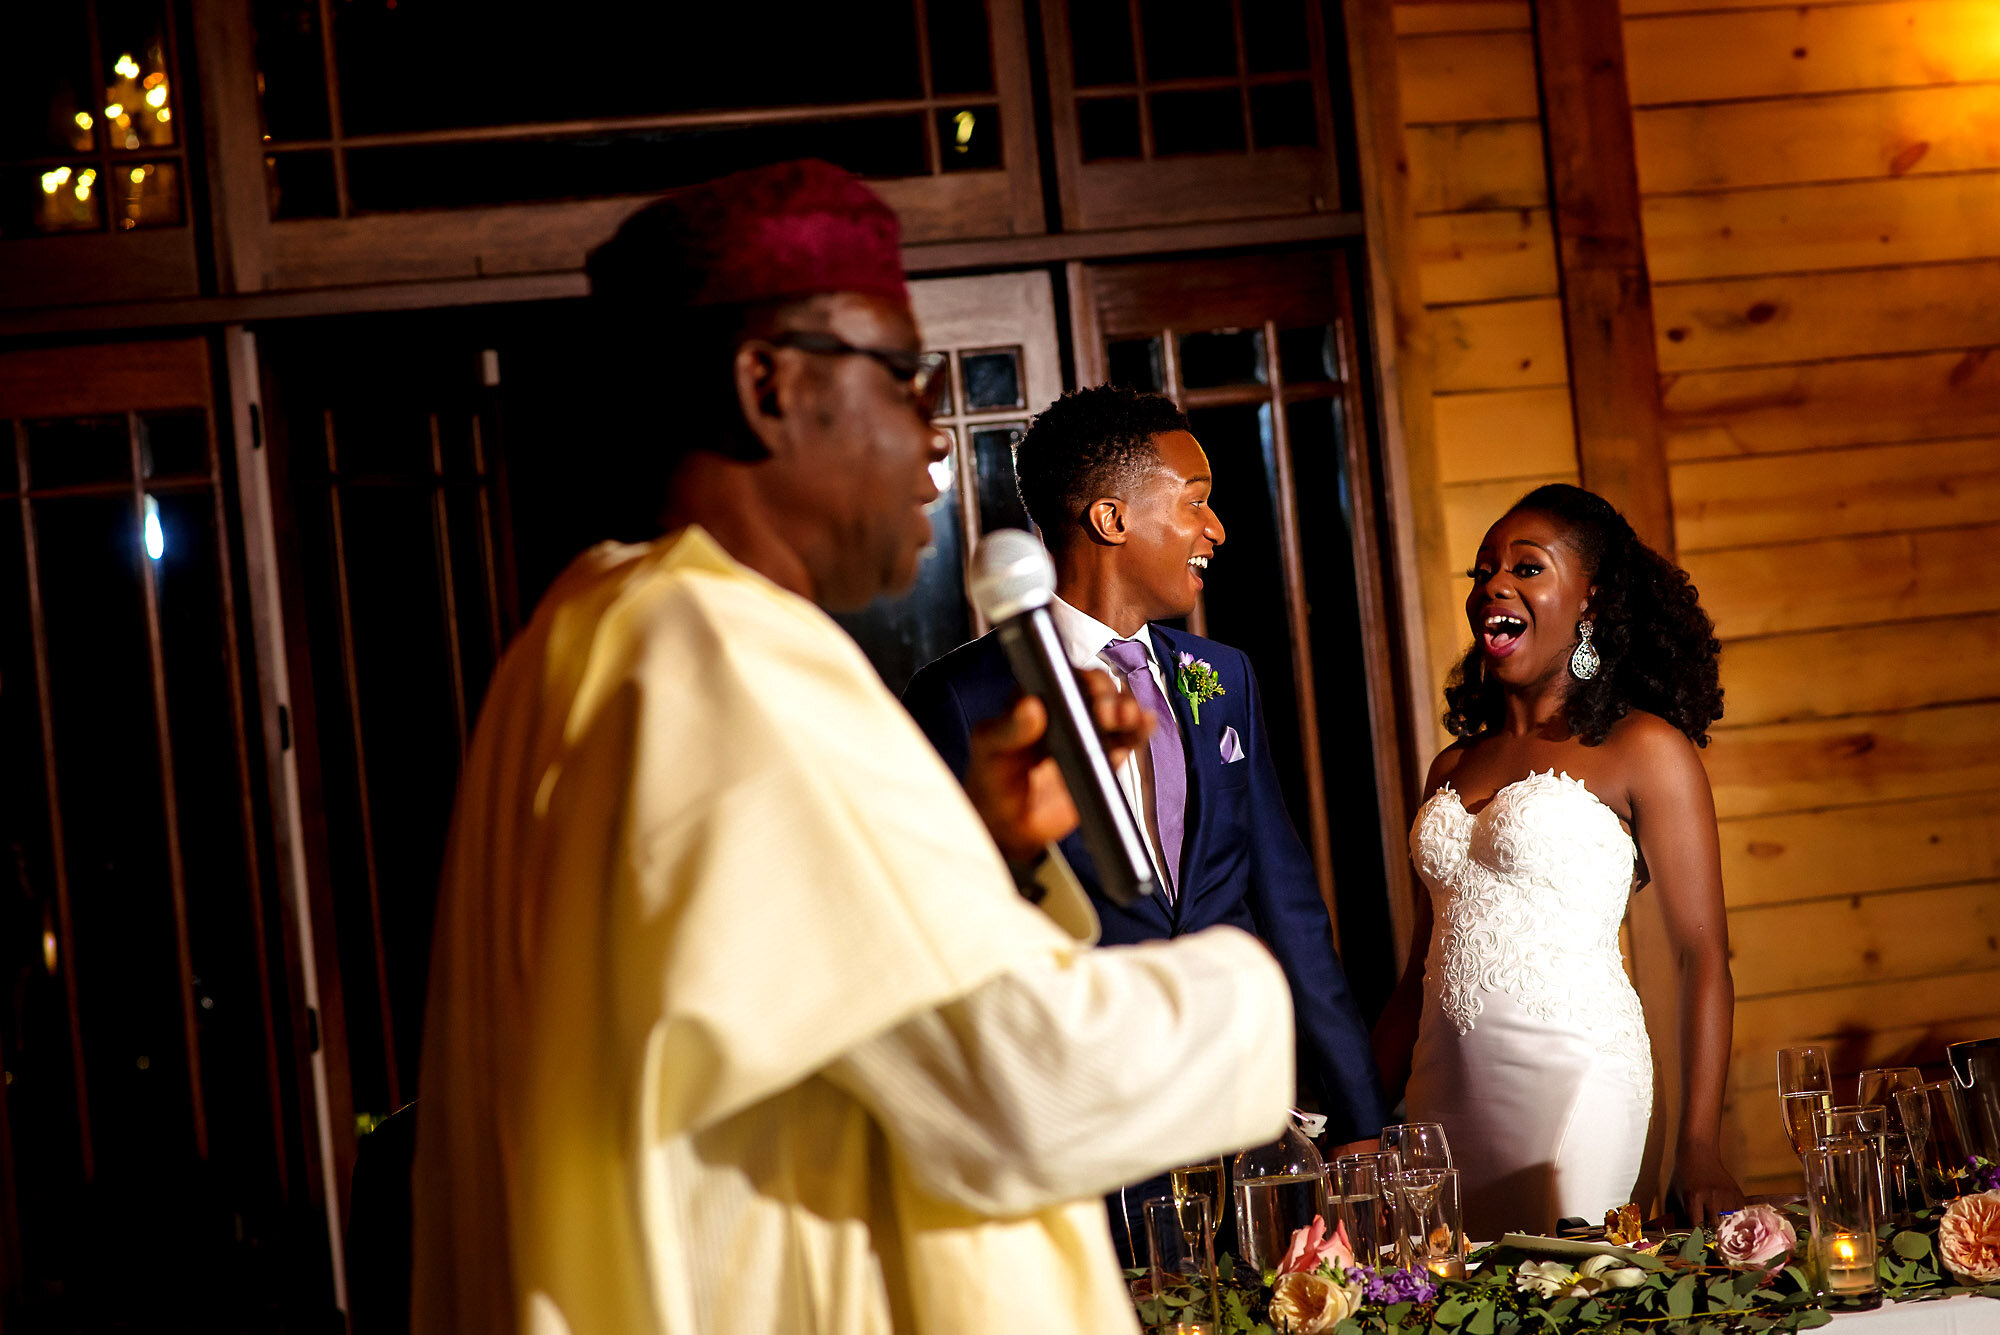 48-Austin-wedding-photographer-Jide-Alakija-reaction of bride and groom to fathers speech.jpg.JPG